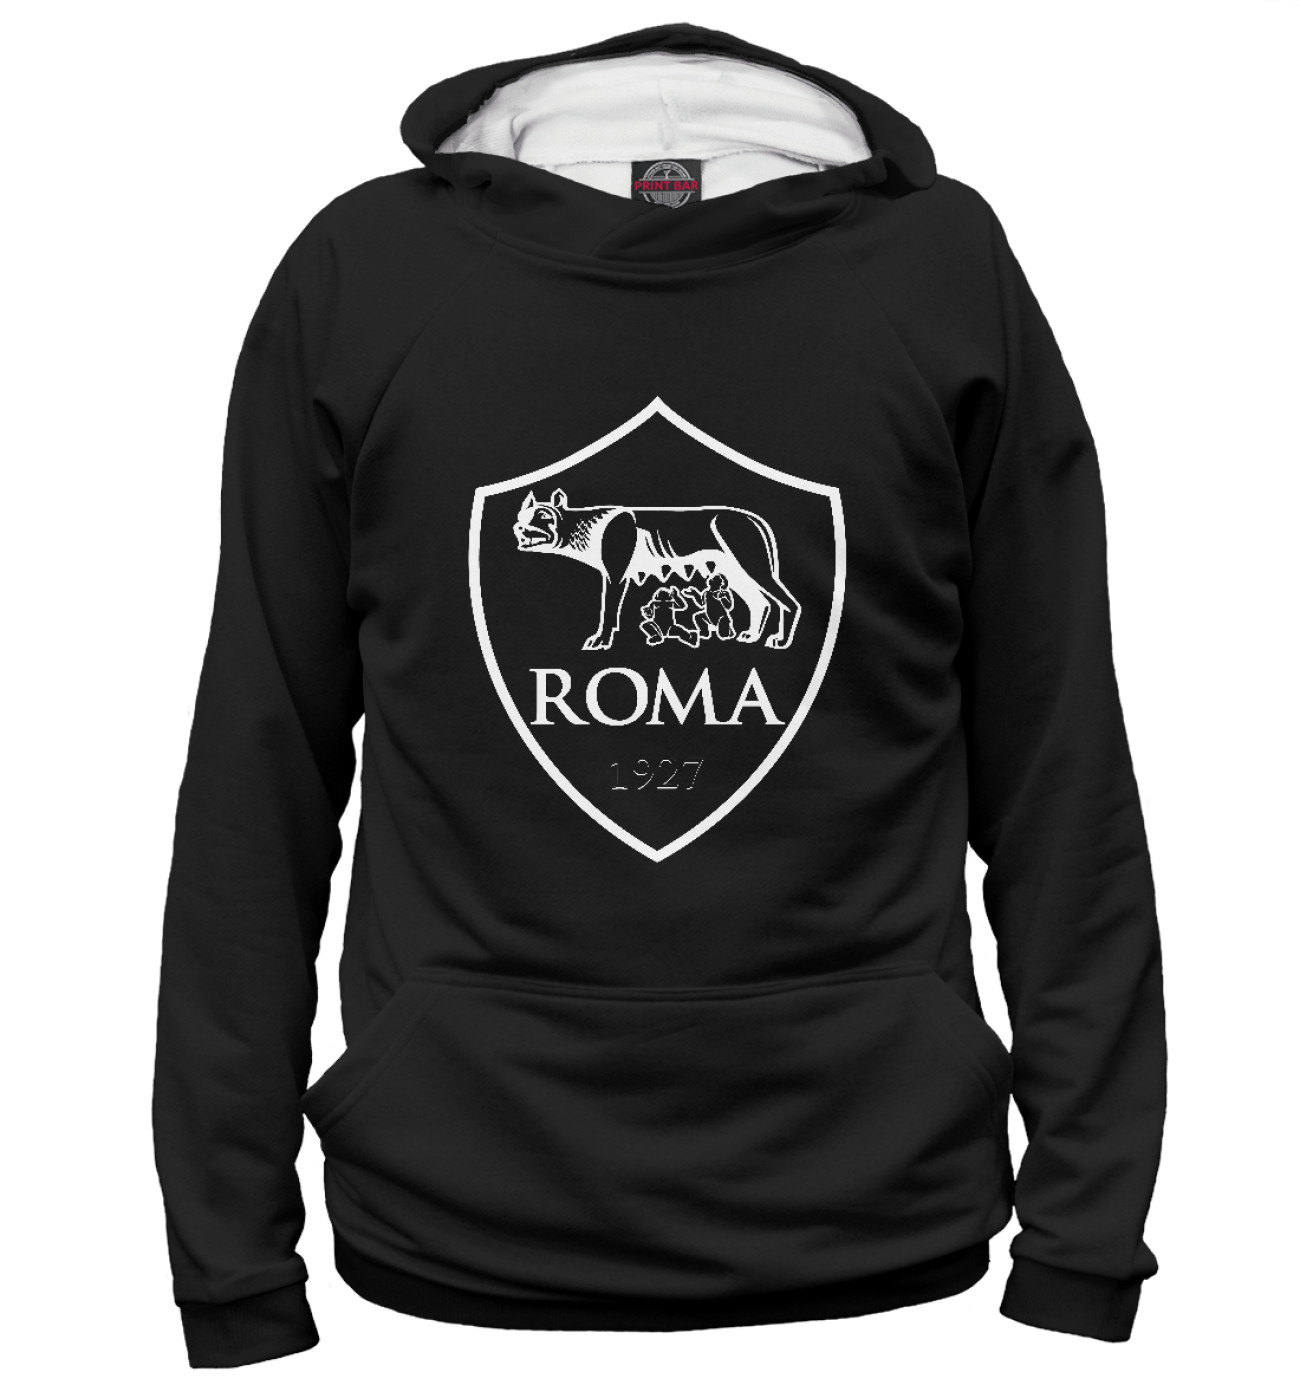 Мужское Худи FC ROMA Black&White, артикул: FTO-315326-hud-2